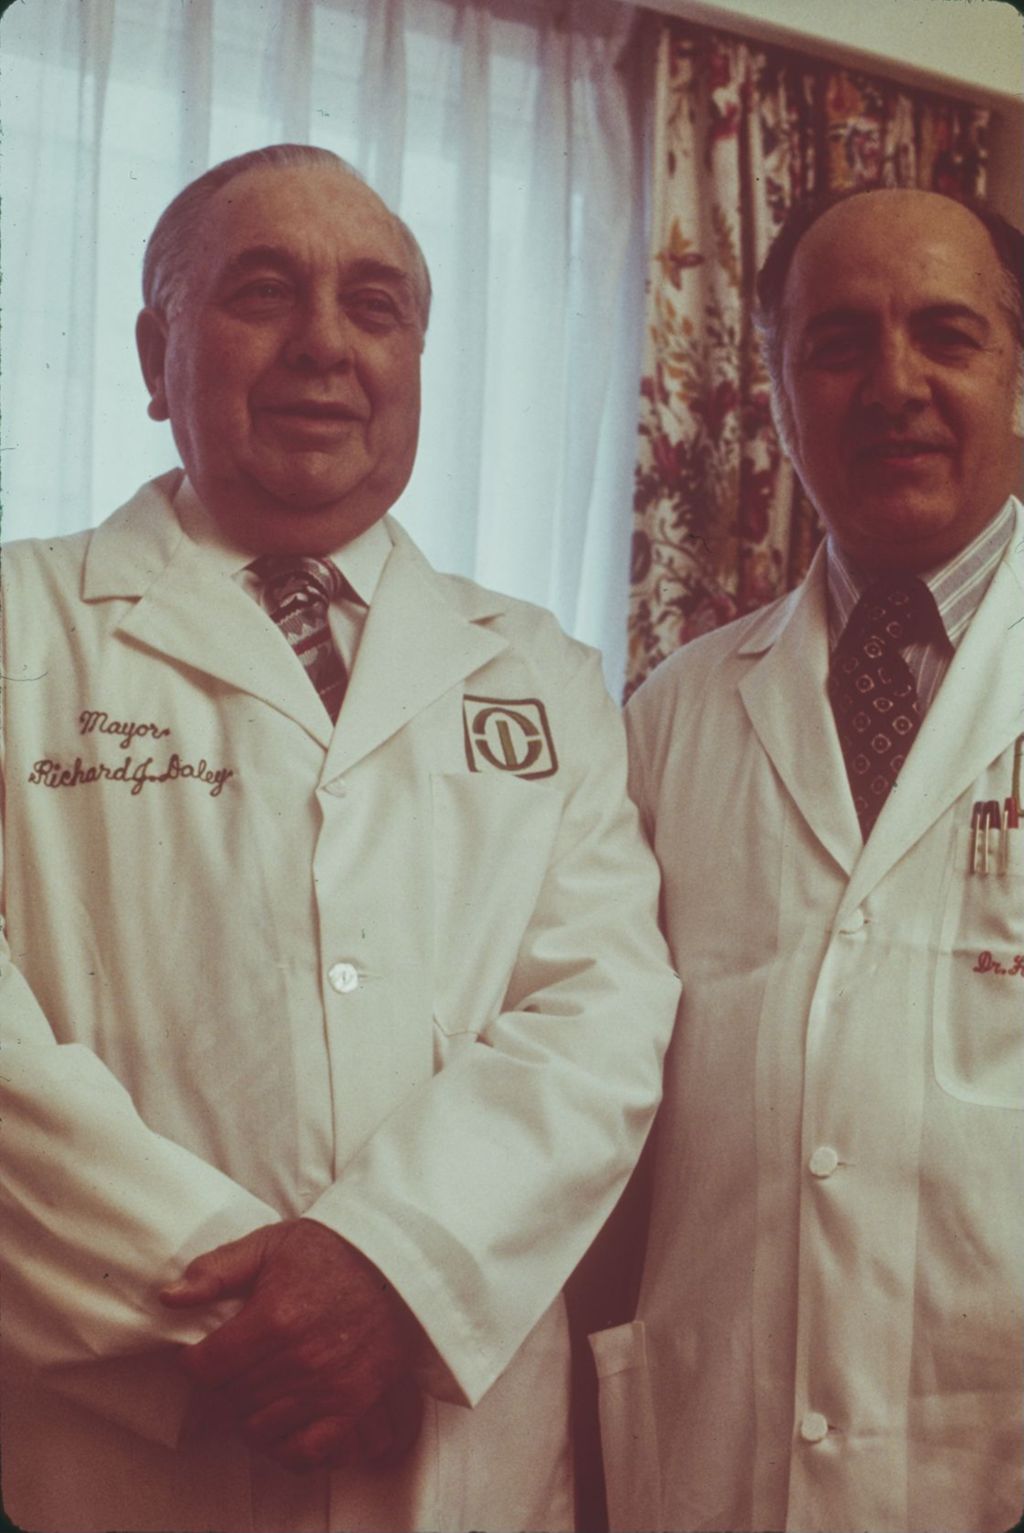 Richard J. Daley with Doctor Javid at Rush-Presbyterian-St. Luke's Medical Center